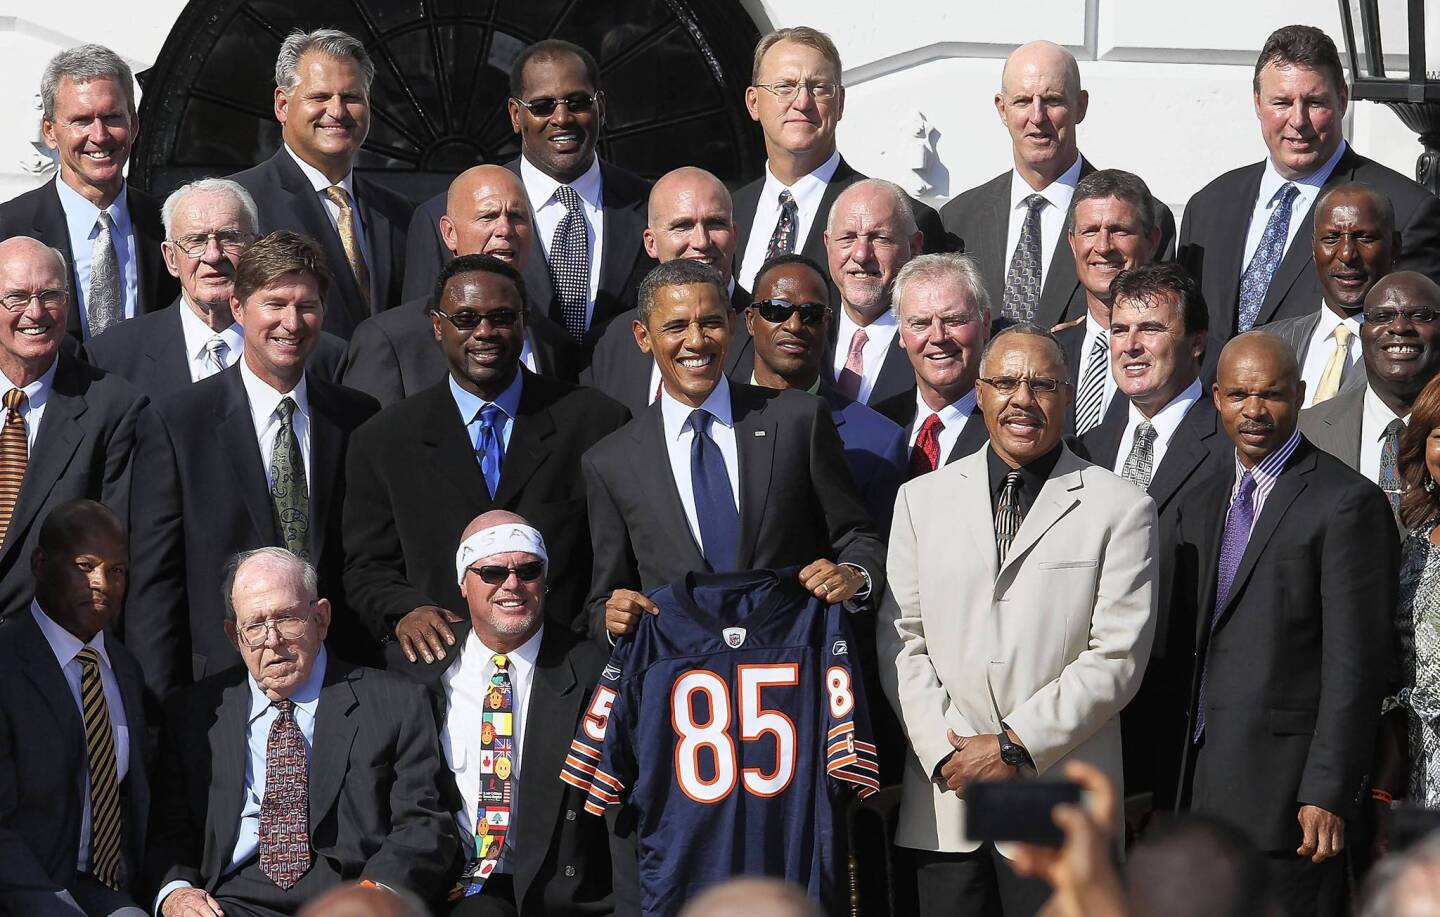 Obama welcomes Super Bowl champion Bears